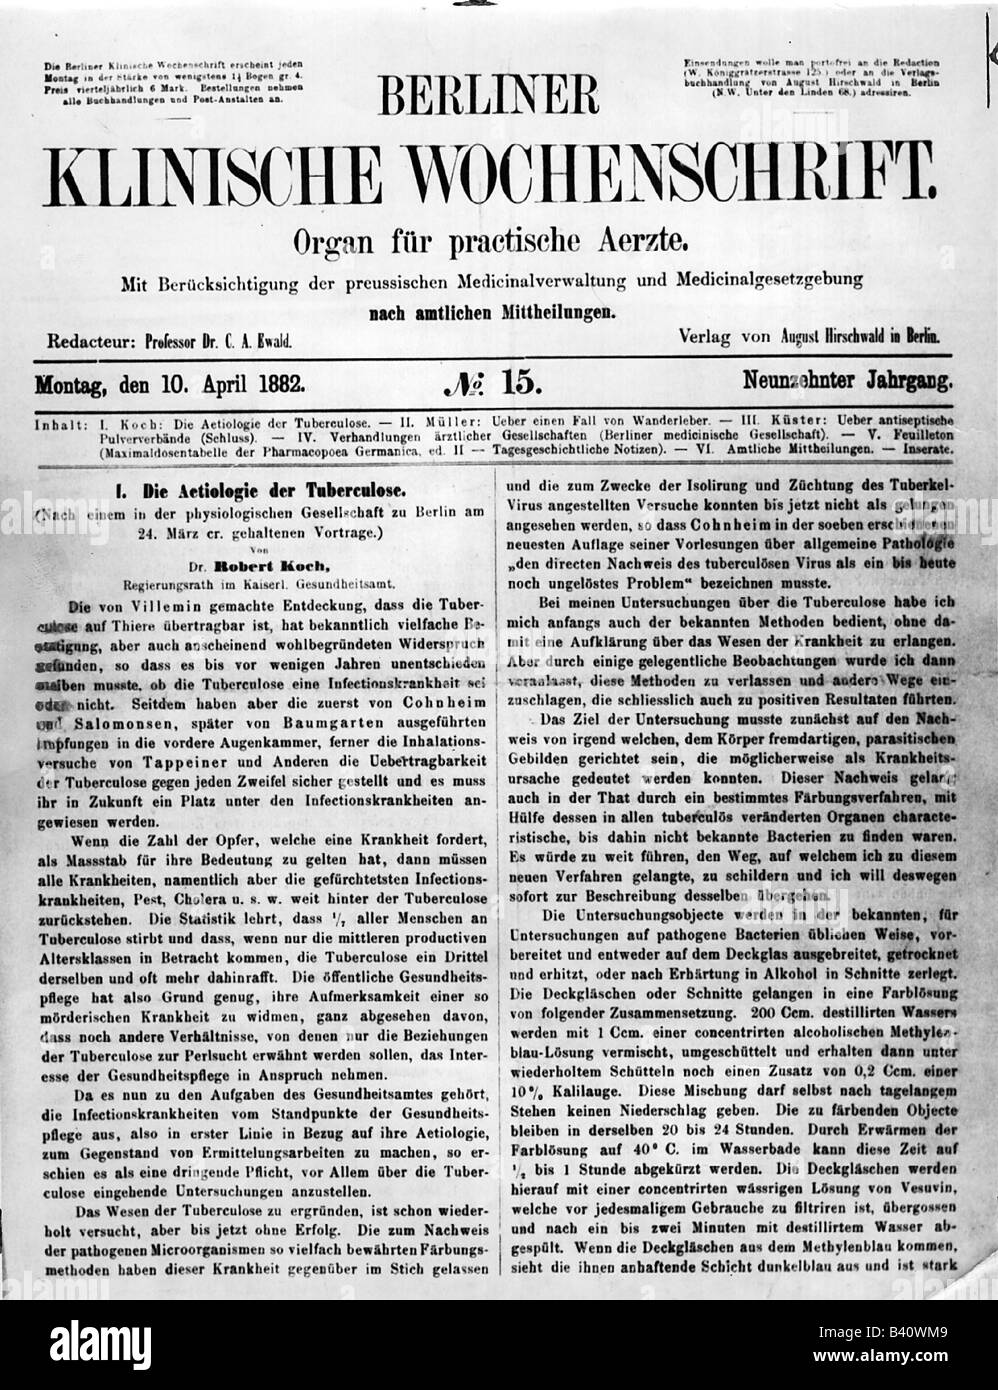 Koch, Robert, 11.12.1843 - 27.5.1910, German scientist (physician), publication of his discovery of tuberculosis, Medical journal 'Klinische Wochenschrift', Berlin, 10.4.1882, Stock Photo